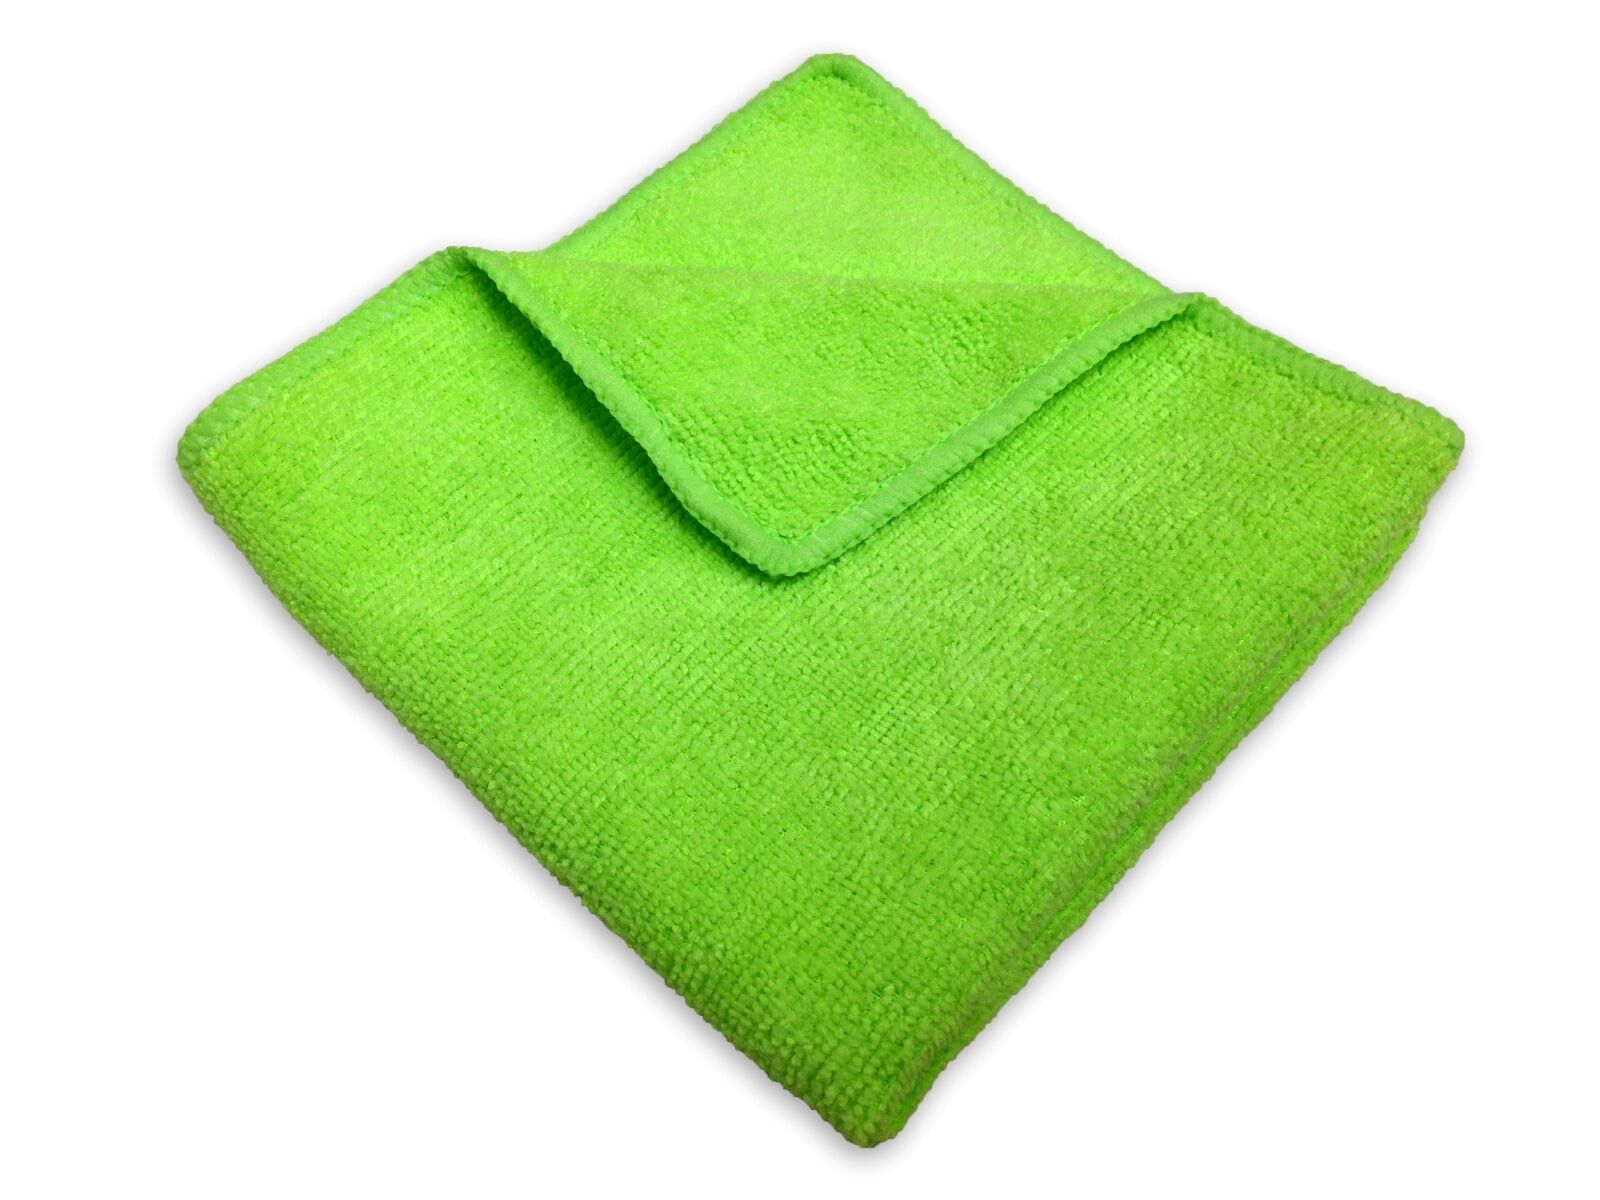 Restaurantware Clean Tek Green Microfiber Cleaning Cloth - 16 inch x 16 inch - 100 Count Box